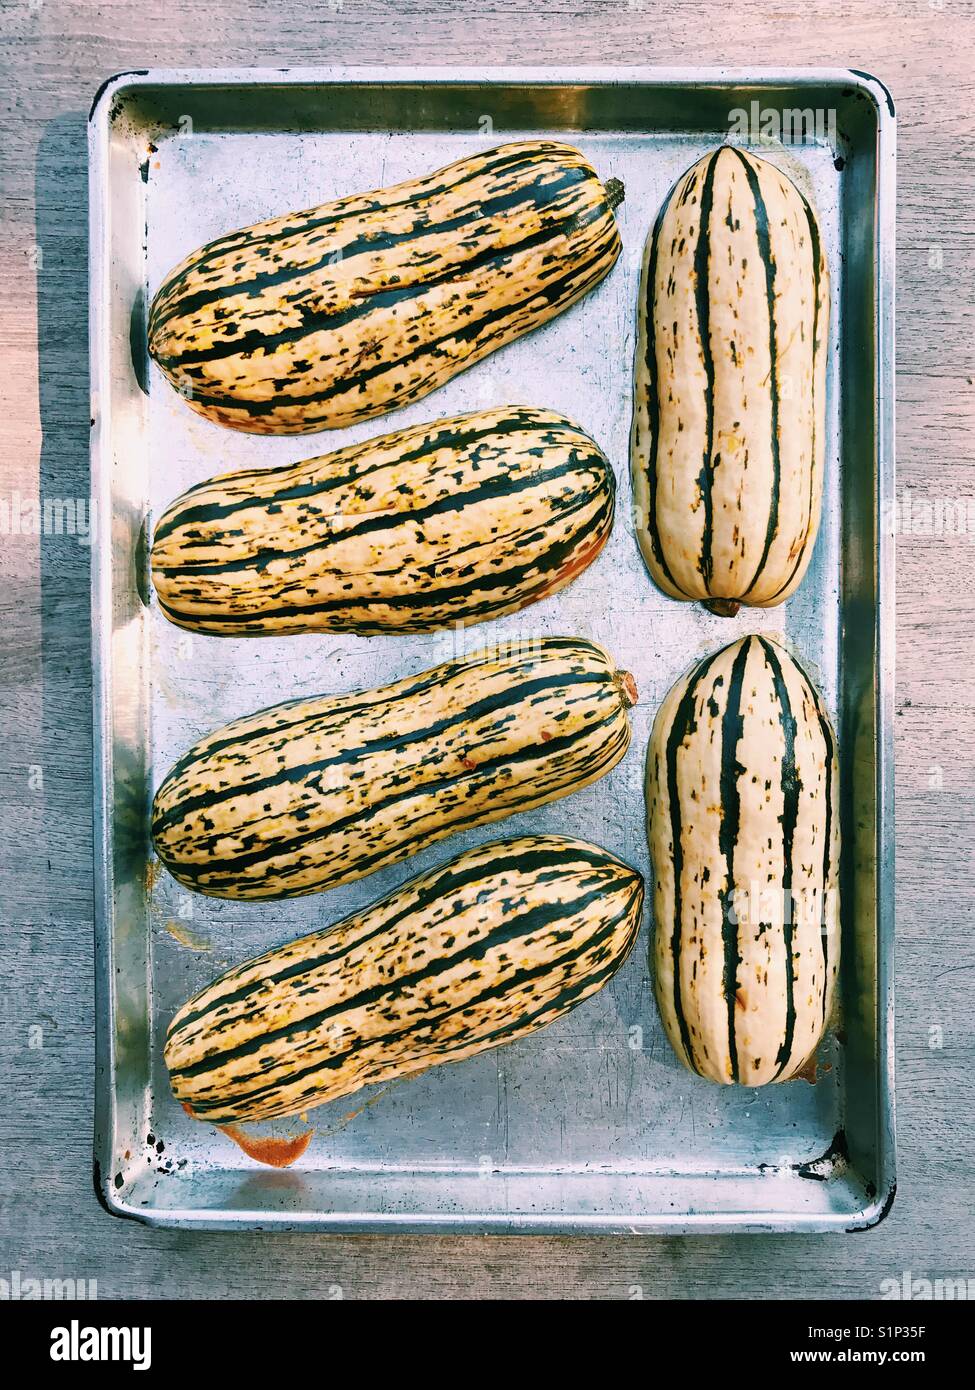 A tray of baked delicata squash halves. Stock Photo